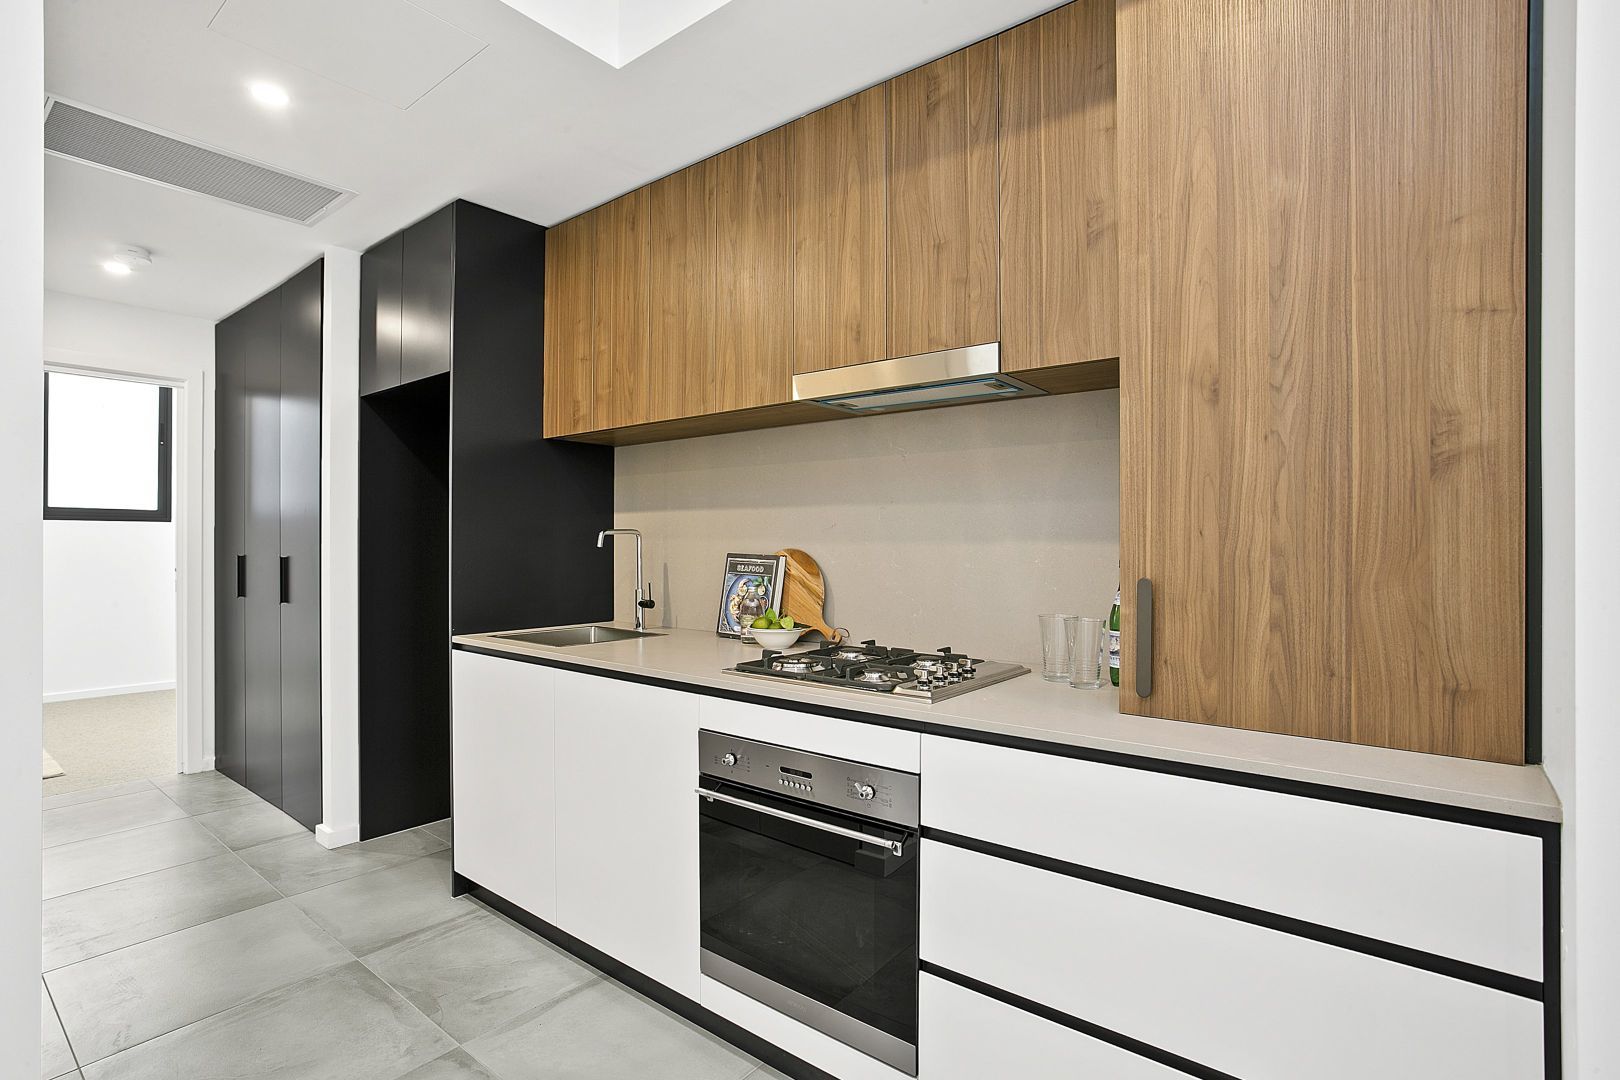 2 bedrooms Apartment / Unit / Flat in 206/3 Ralph Street ALEXANDRIA NSW, 2015